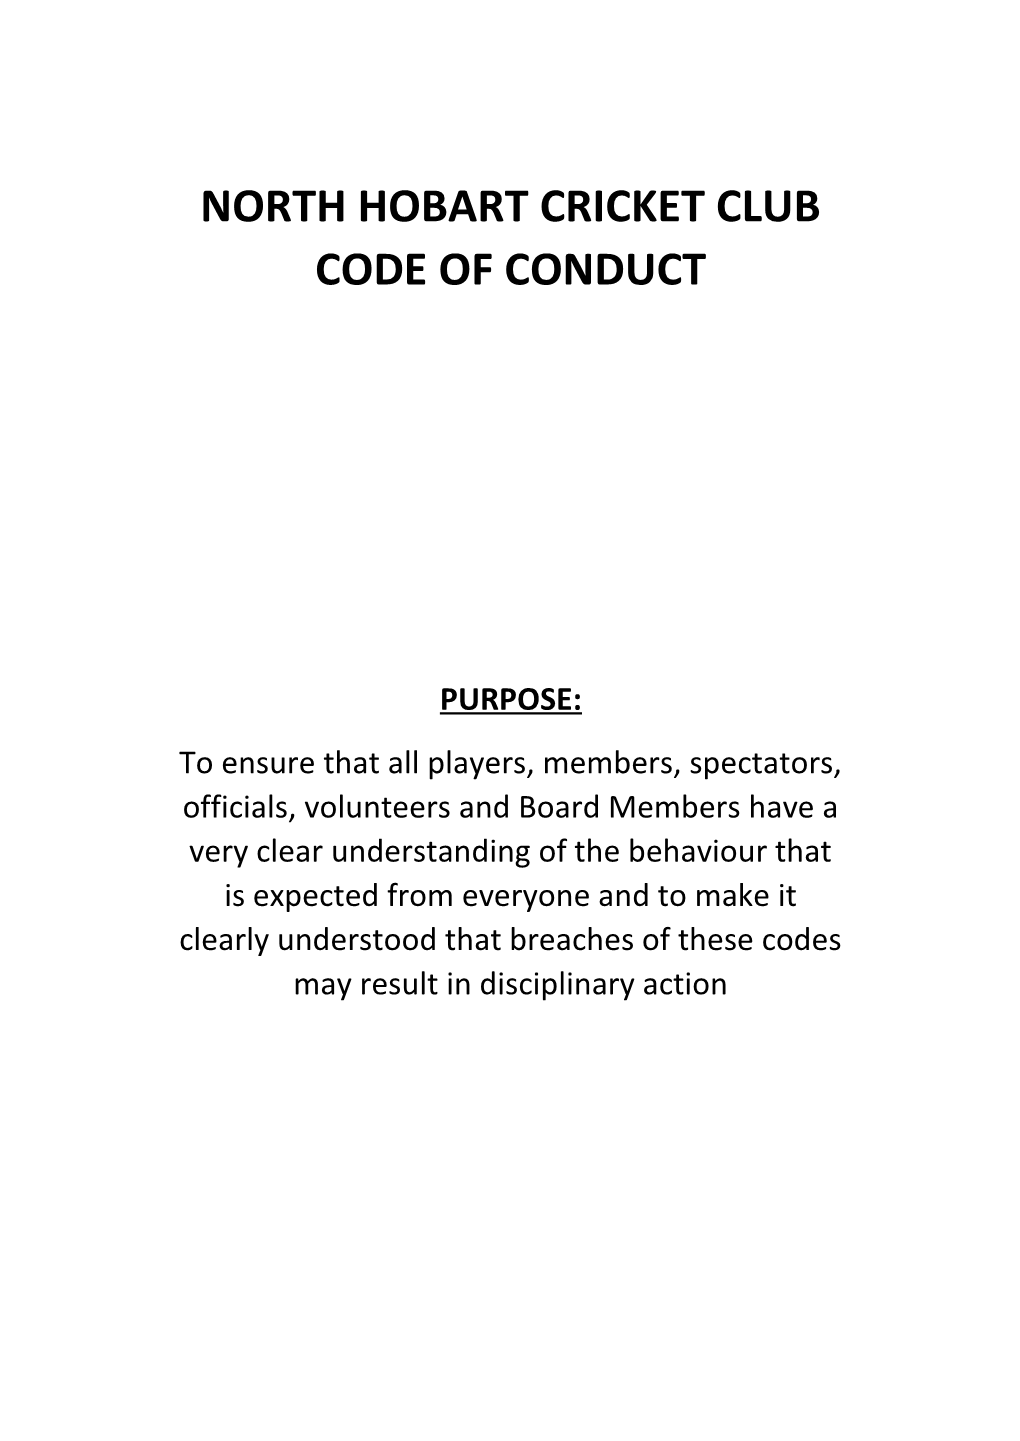 North Hobart Cricket Club Code of Conduct